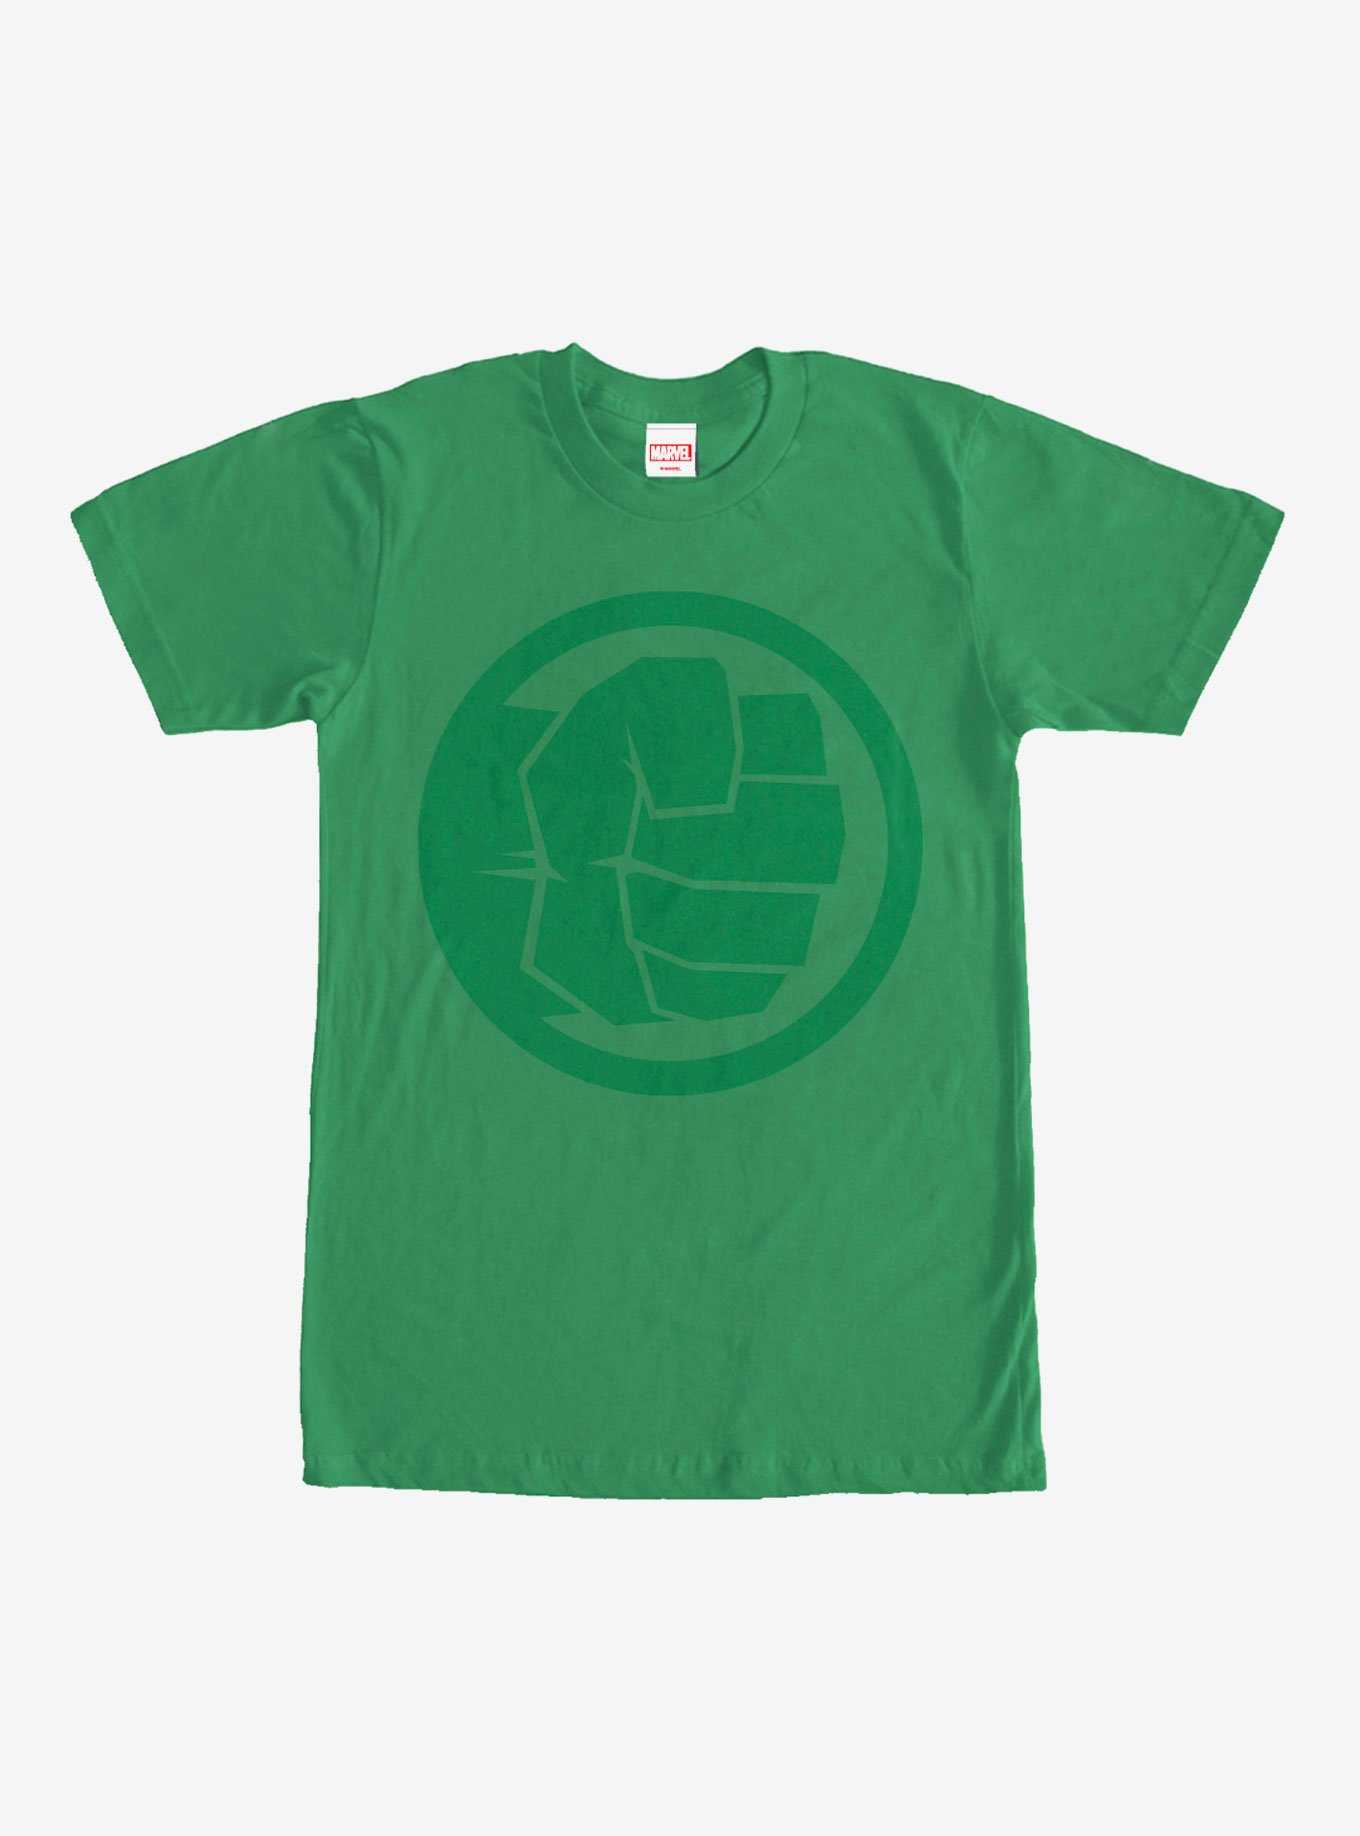 Marvel Hulk Fist T-Shirt, , hi-res